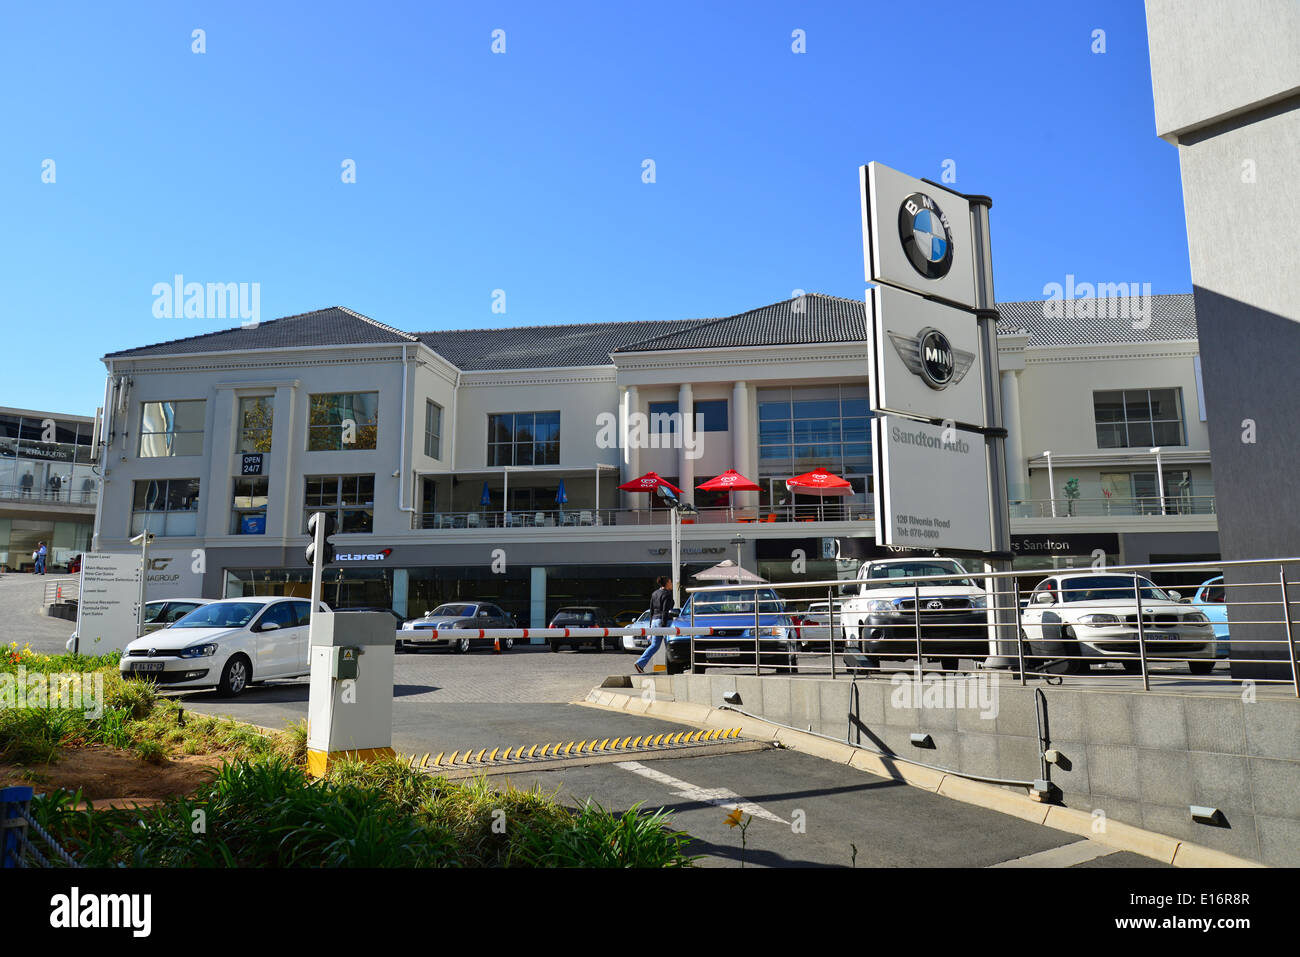 Sandton Auto Car Dealership, Rivonia Road, CBD, Sandton, Johannesburg, Gauteng Province, Republic of South Africa Stock Photo